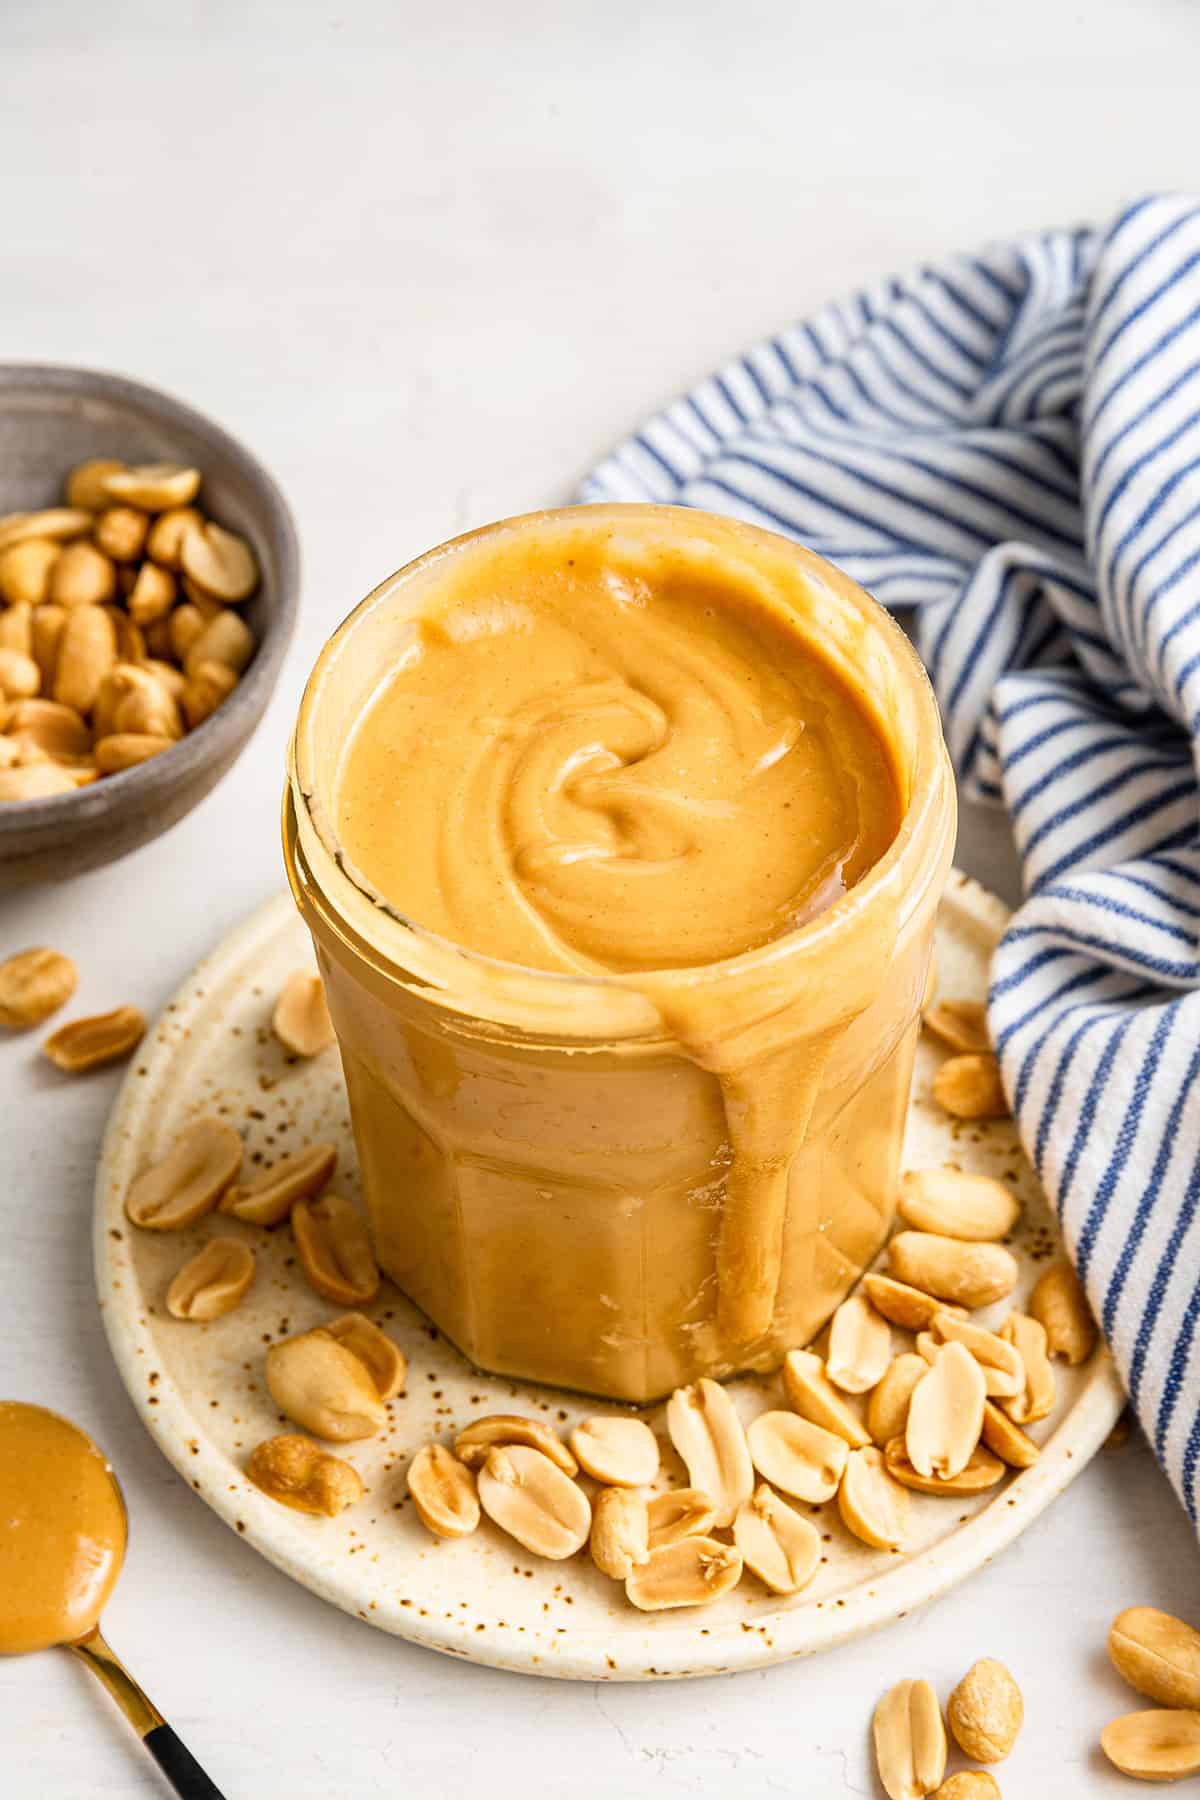 Tips for the Best Homemade Peanut Butter: